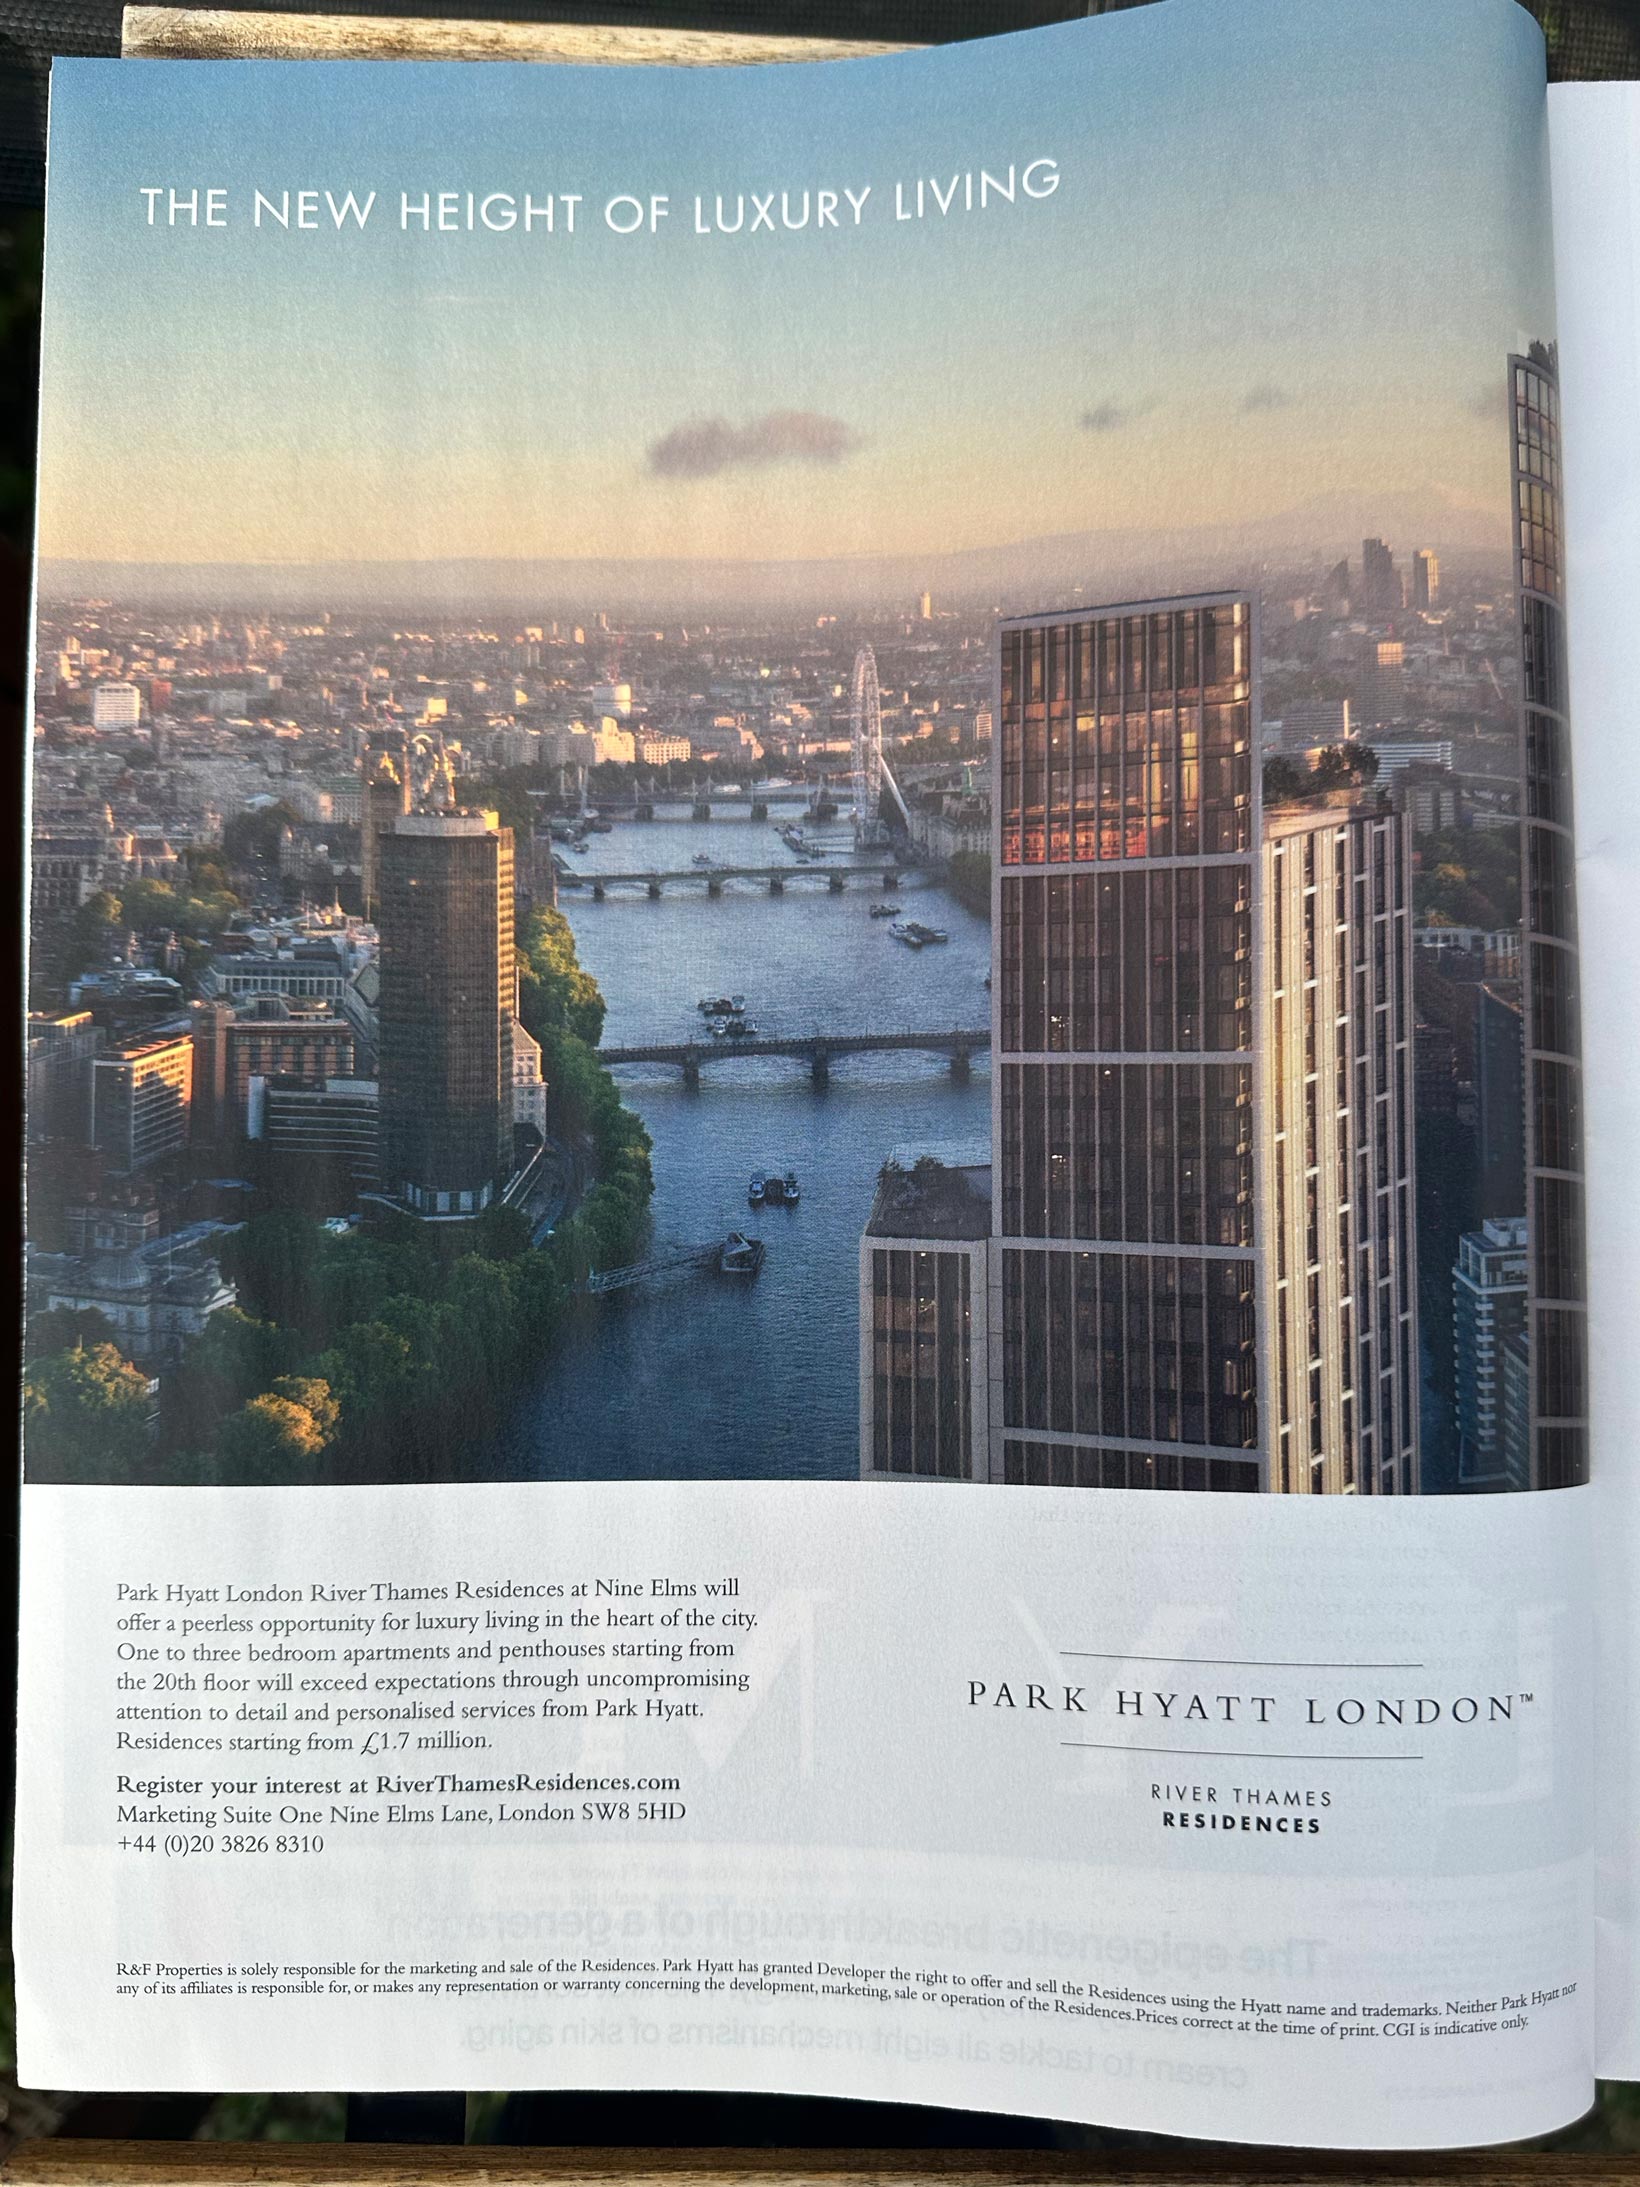 Just launched - Park Hyatt London River Thames Residences